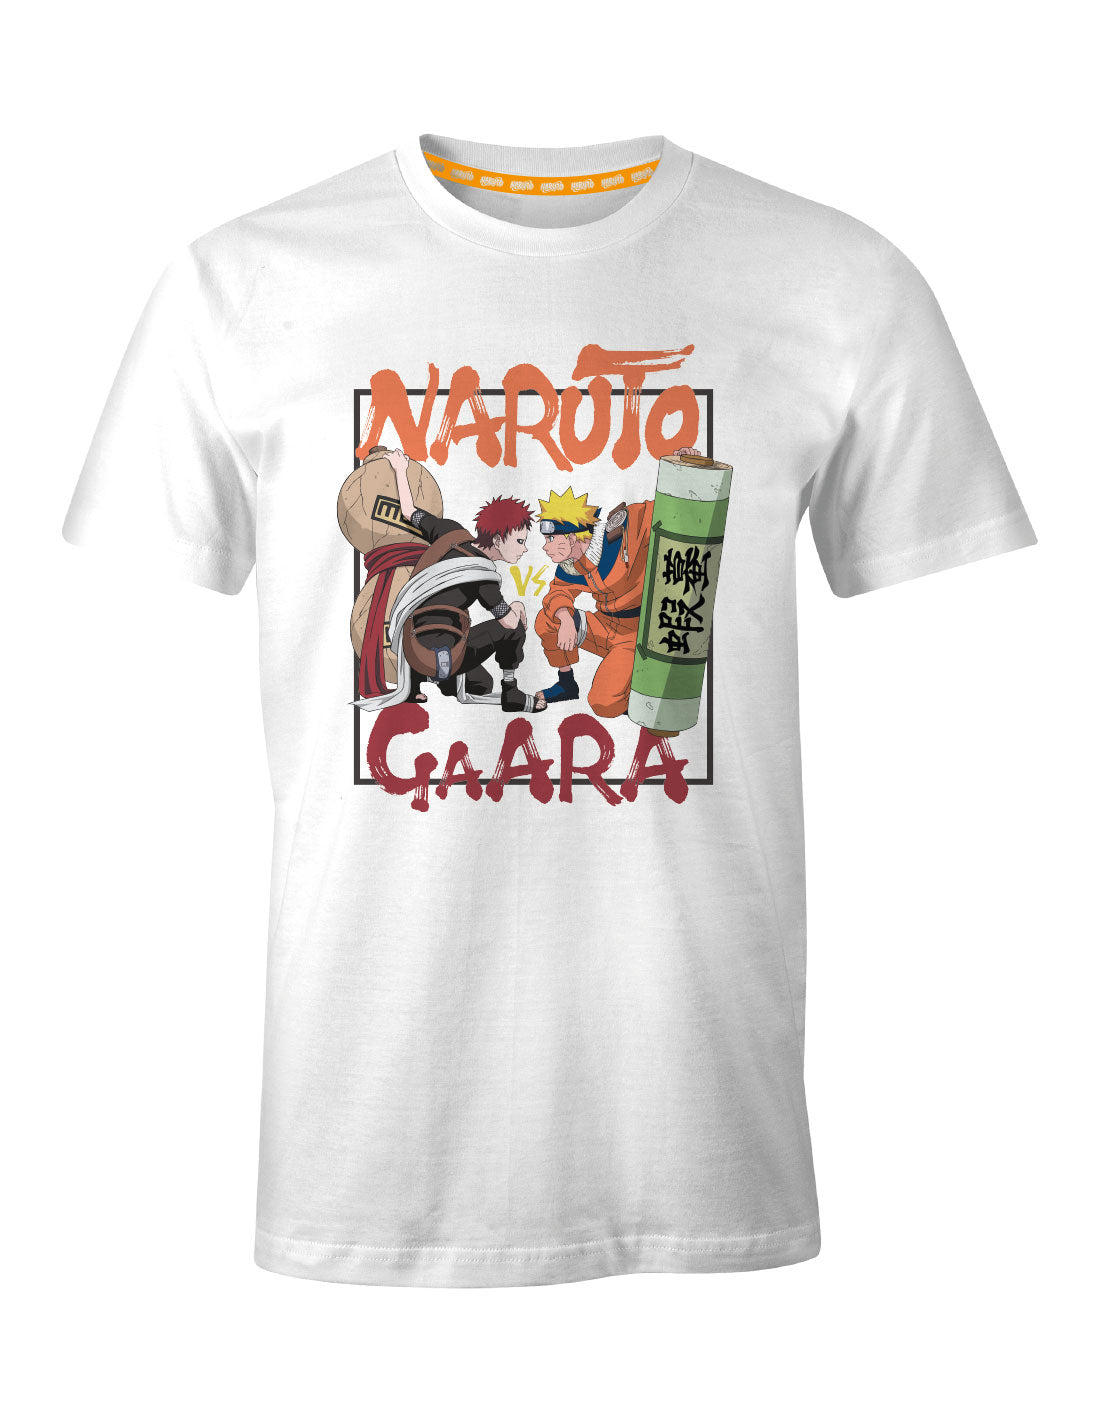 Naruto t-shirt - Naruto VS Gaara